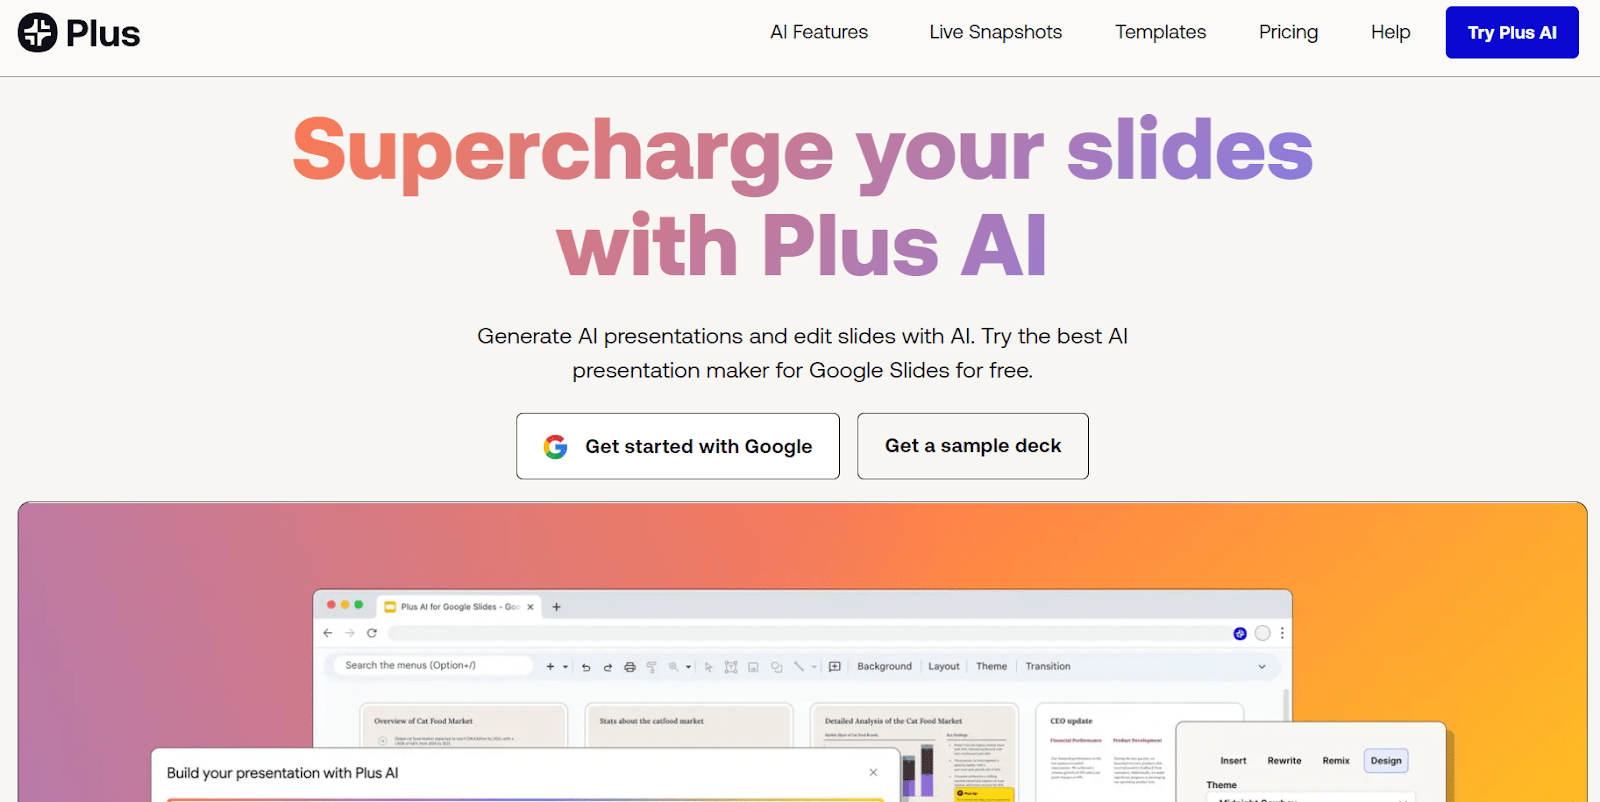 plus ai website - supercharge your slides with plus ai